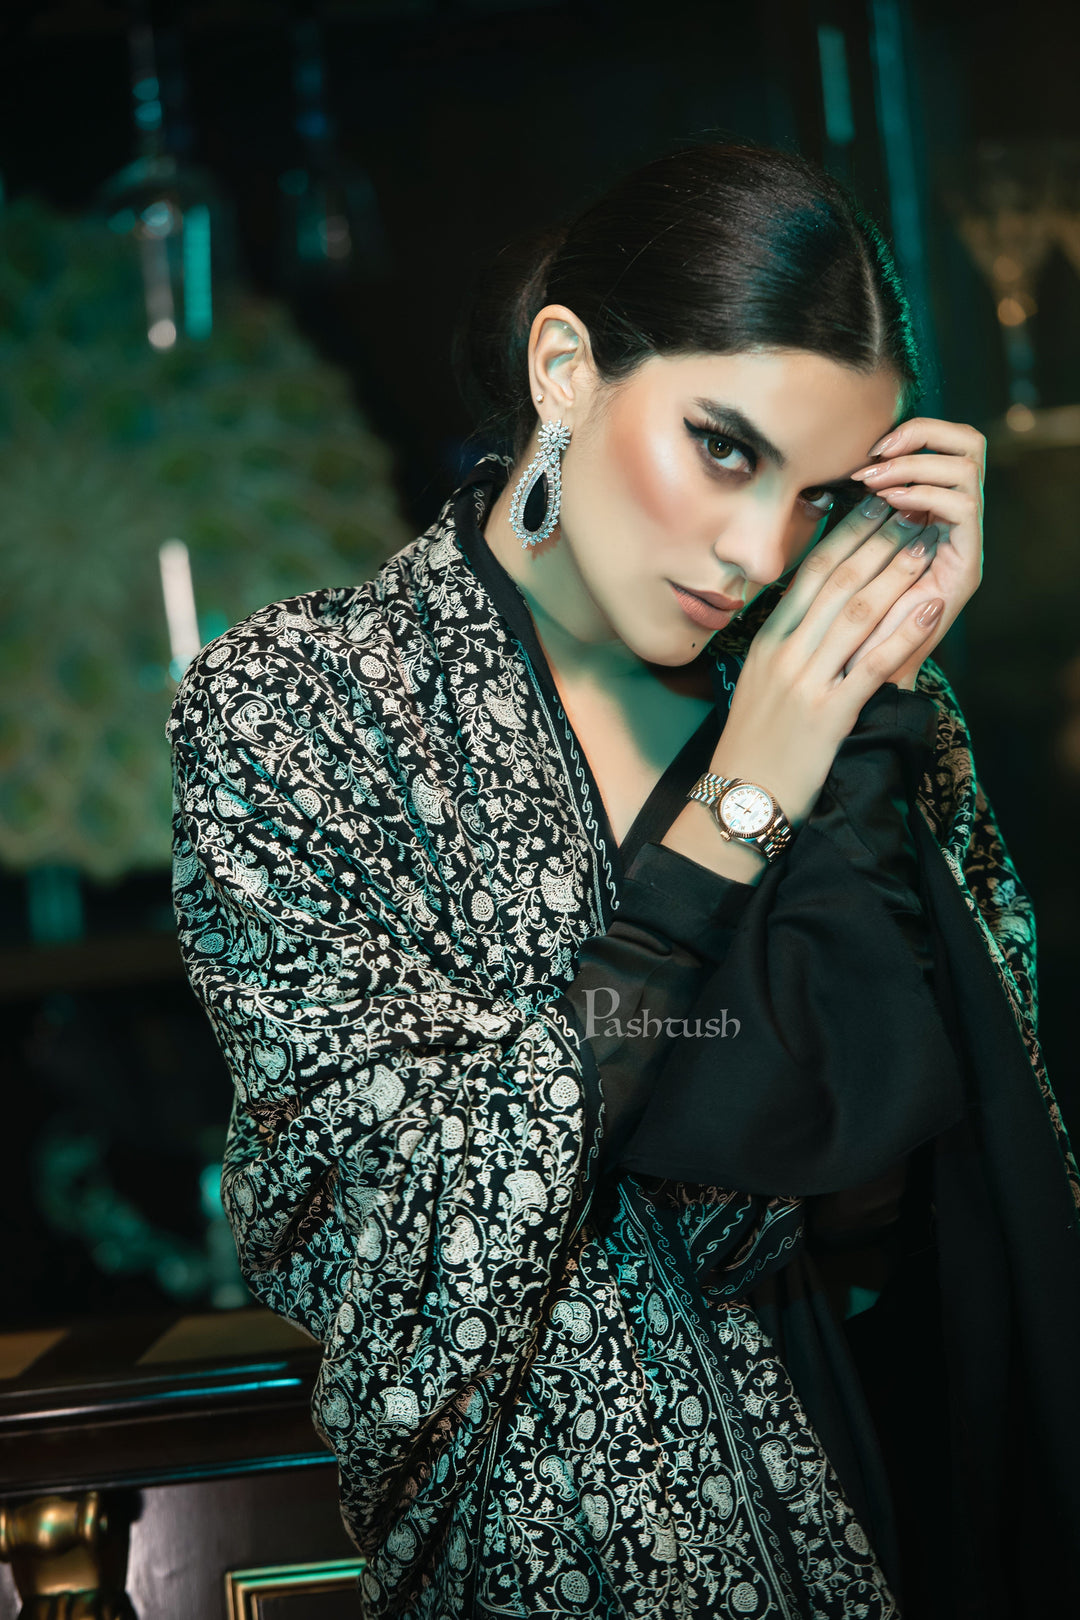 Pashtush India Womens Shawls Pashtush womens Extra Fine Wool Shawl, tone on tone embroidery design, Black